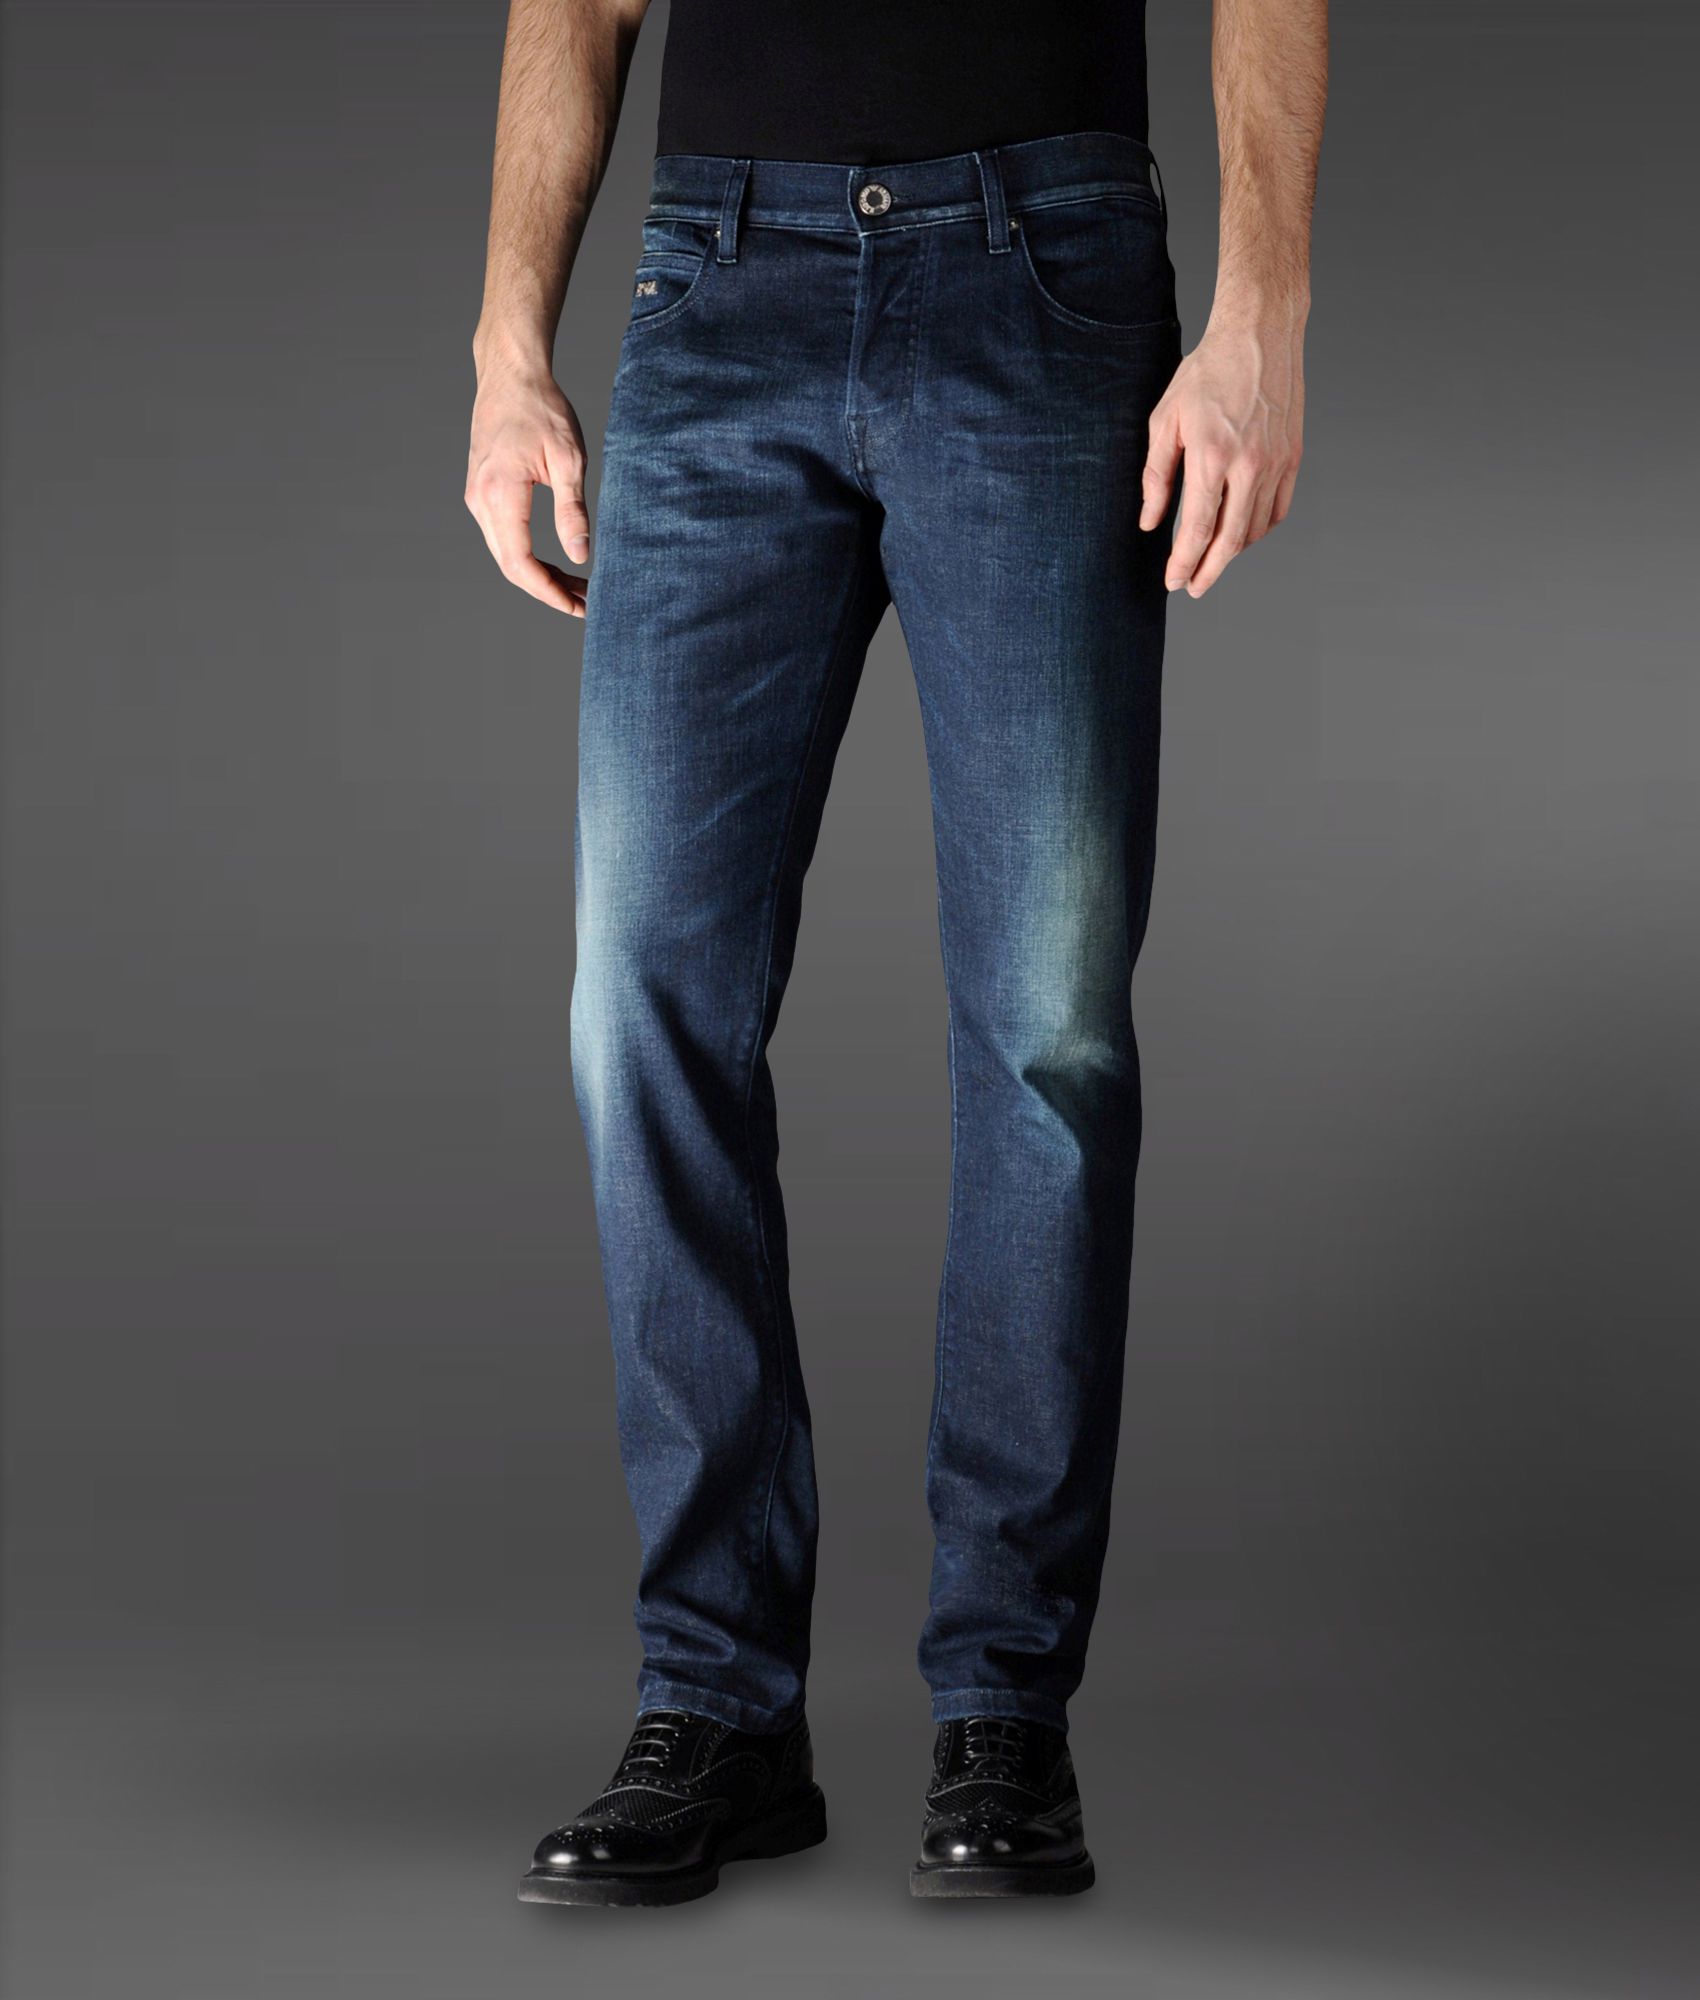 Lyst - Emporio Armani Regular Fit Jeans Regular Leg in Blue for Men